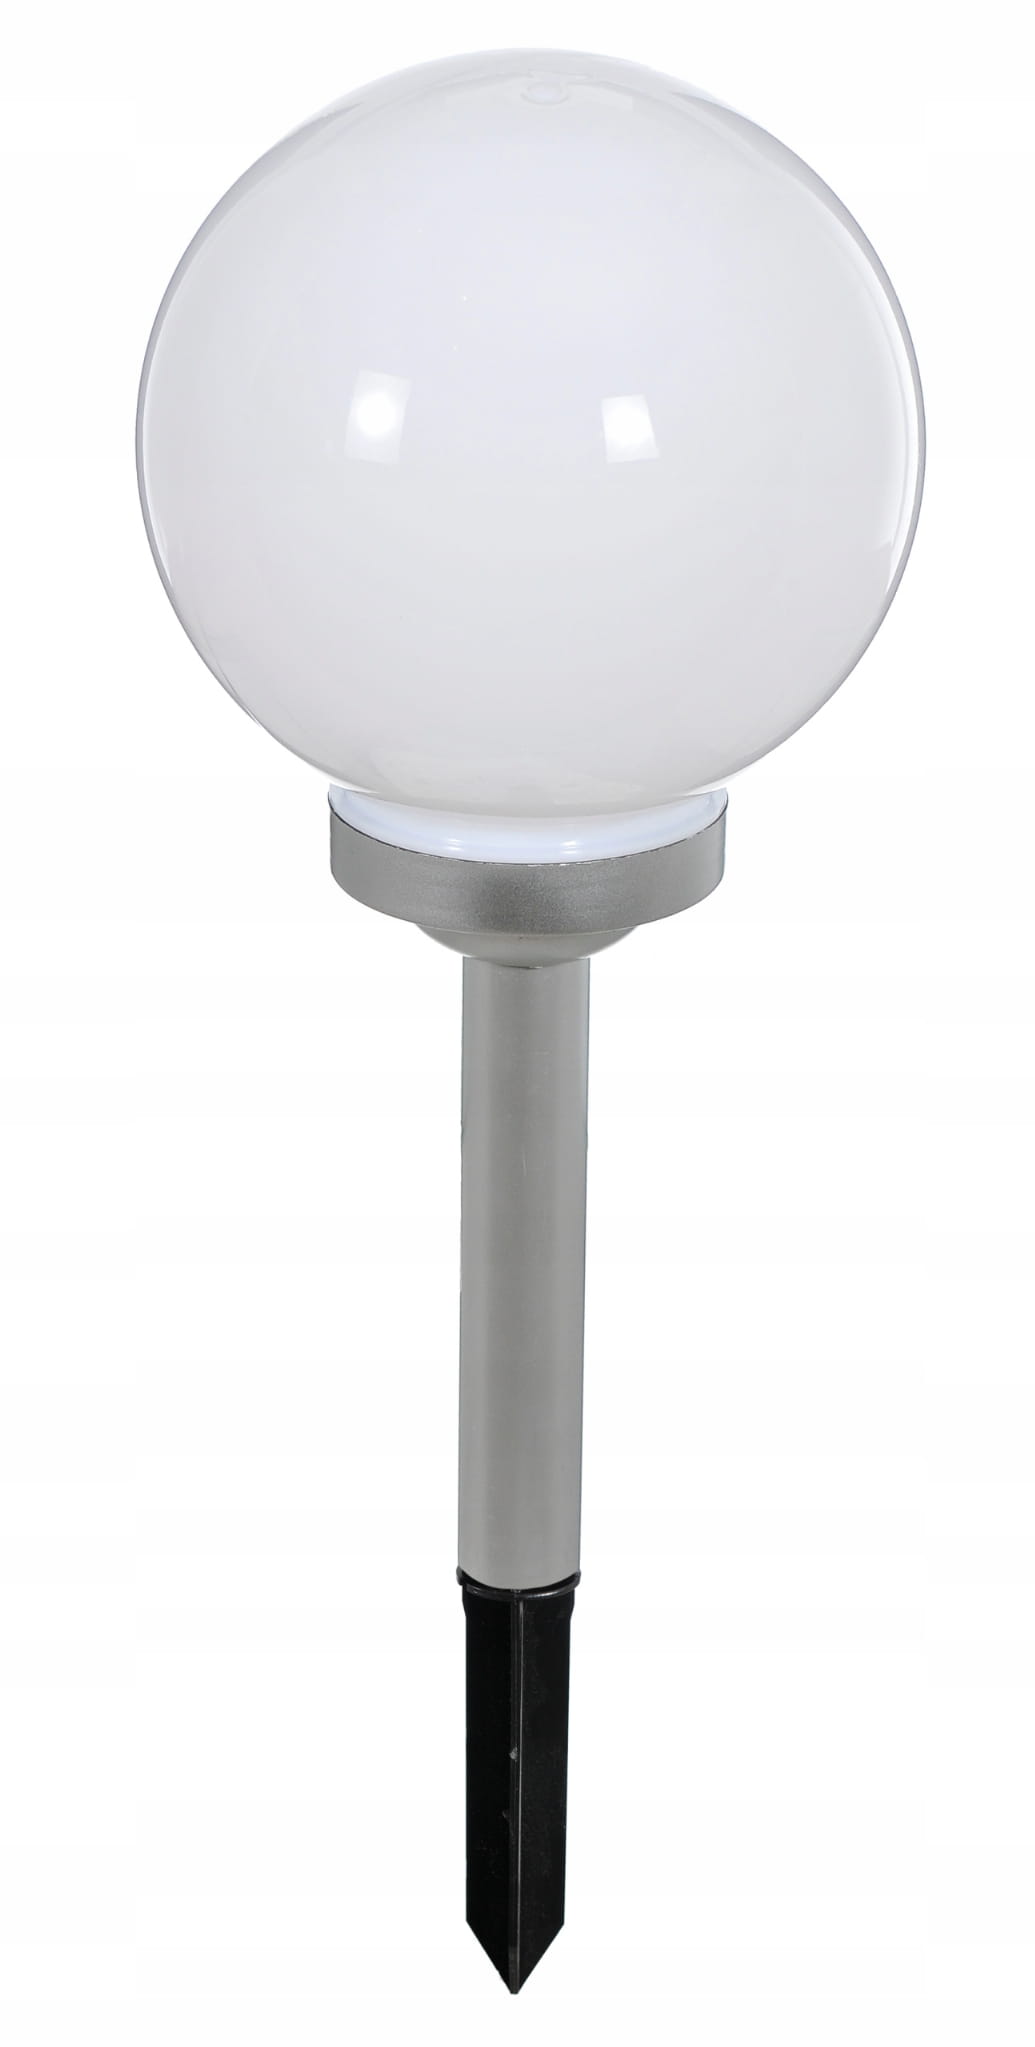 Lampa-solarna-KULA-15cm-ogrodowa-LED-czujnik-EAN-GTIN-5900410652774